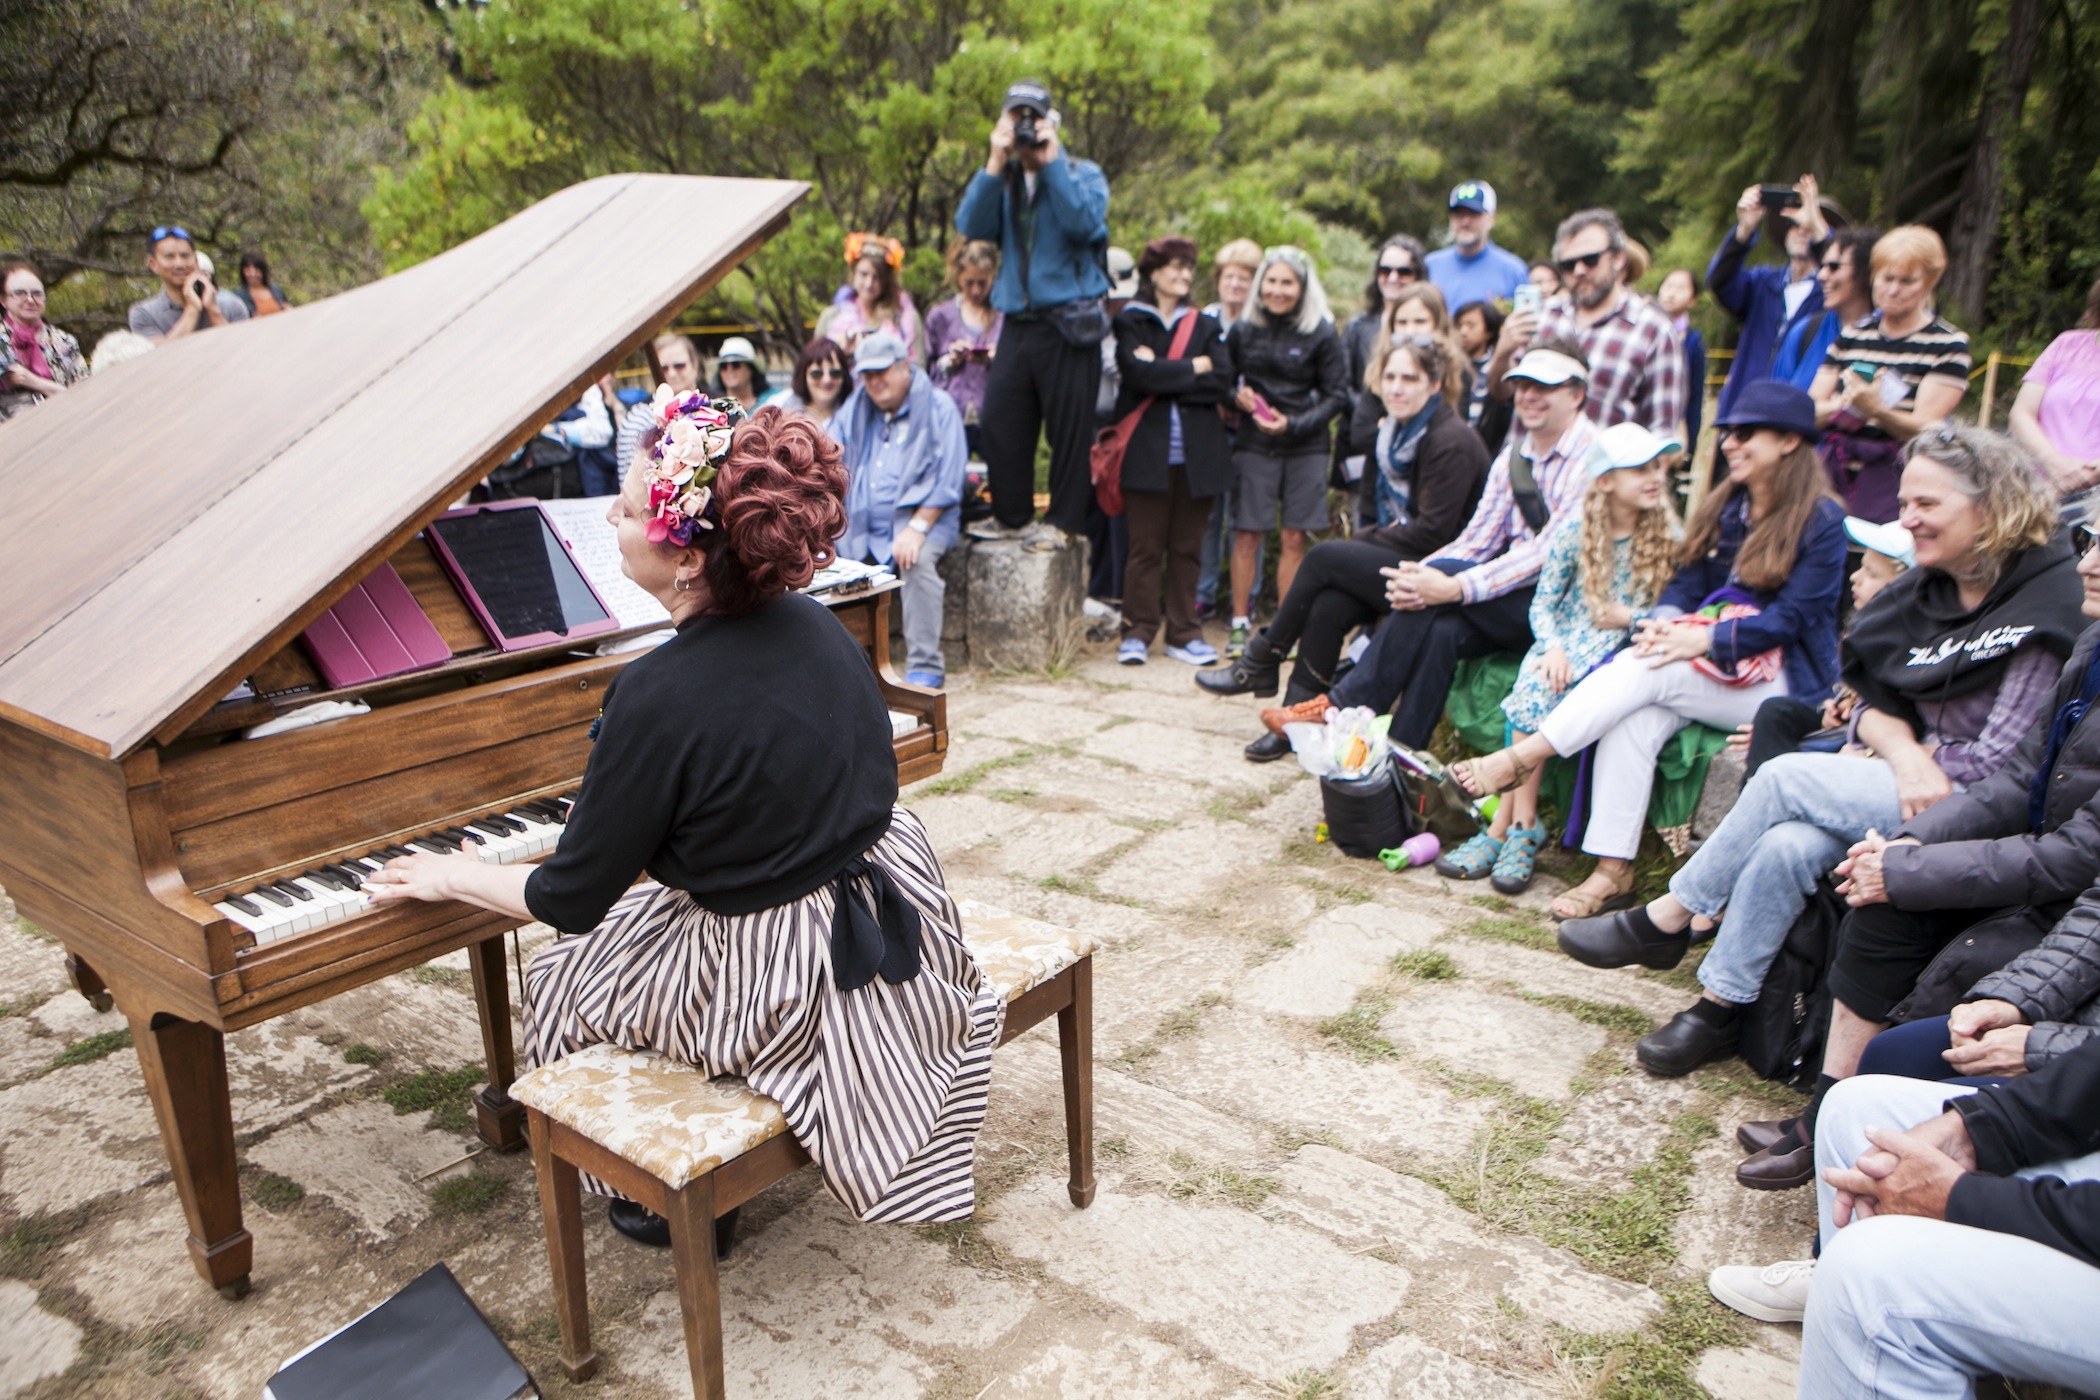 local links: flower piano starts thursday at botanical garden